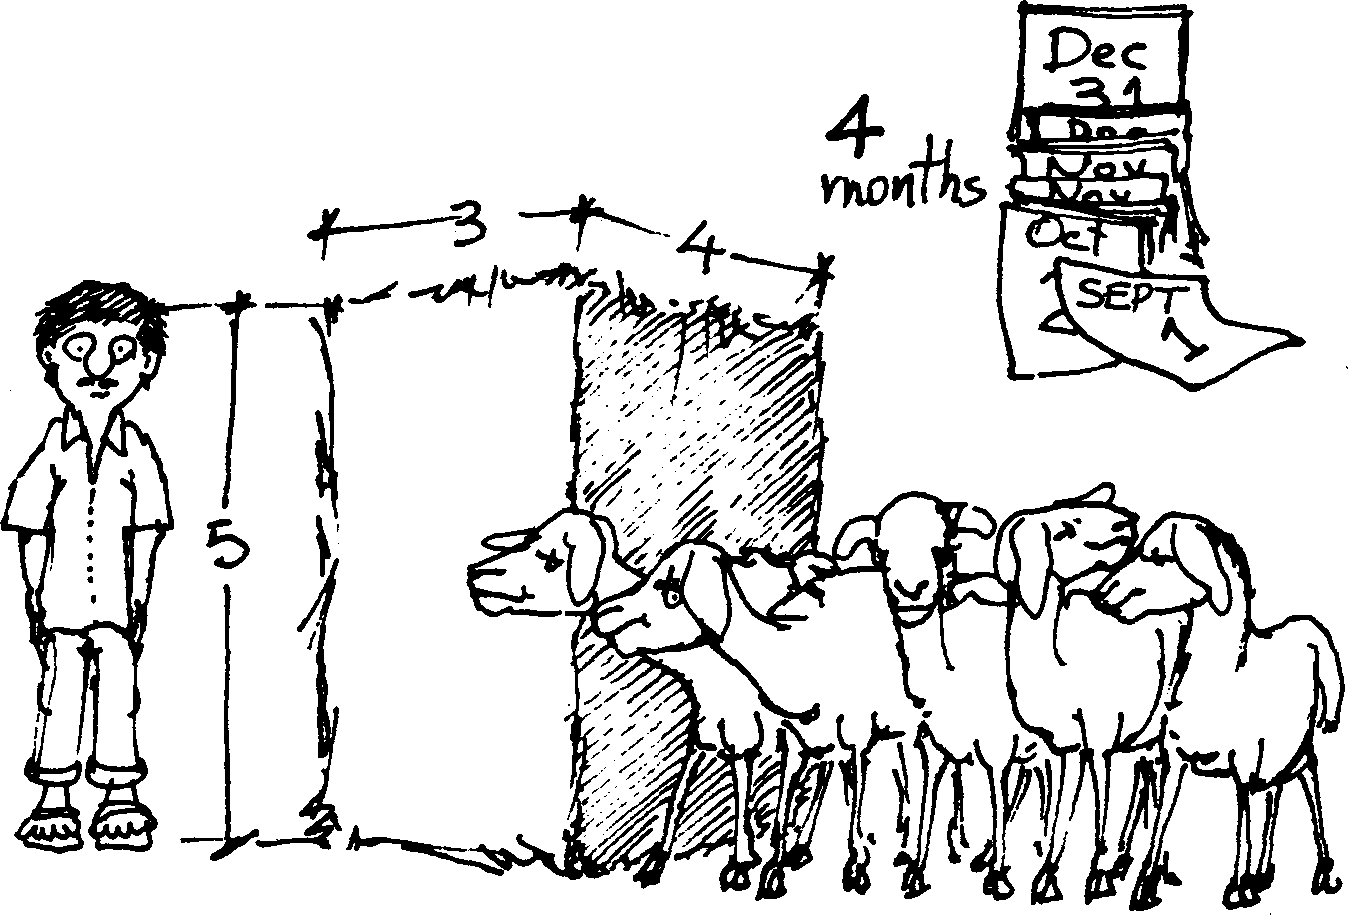 SELF-TEACHING MANUAL IN HAIR SHEEP PRODUCTION